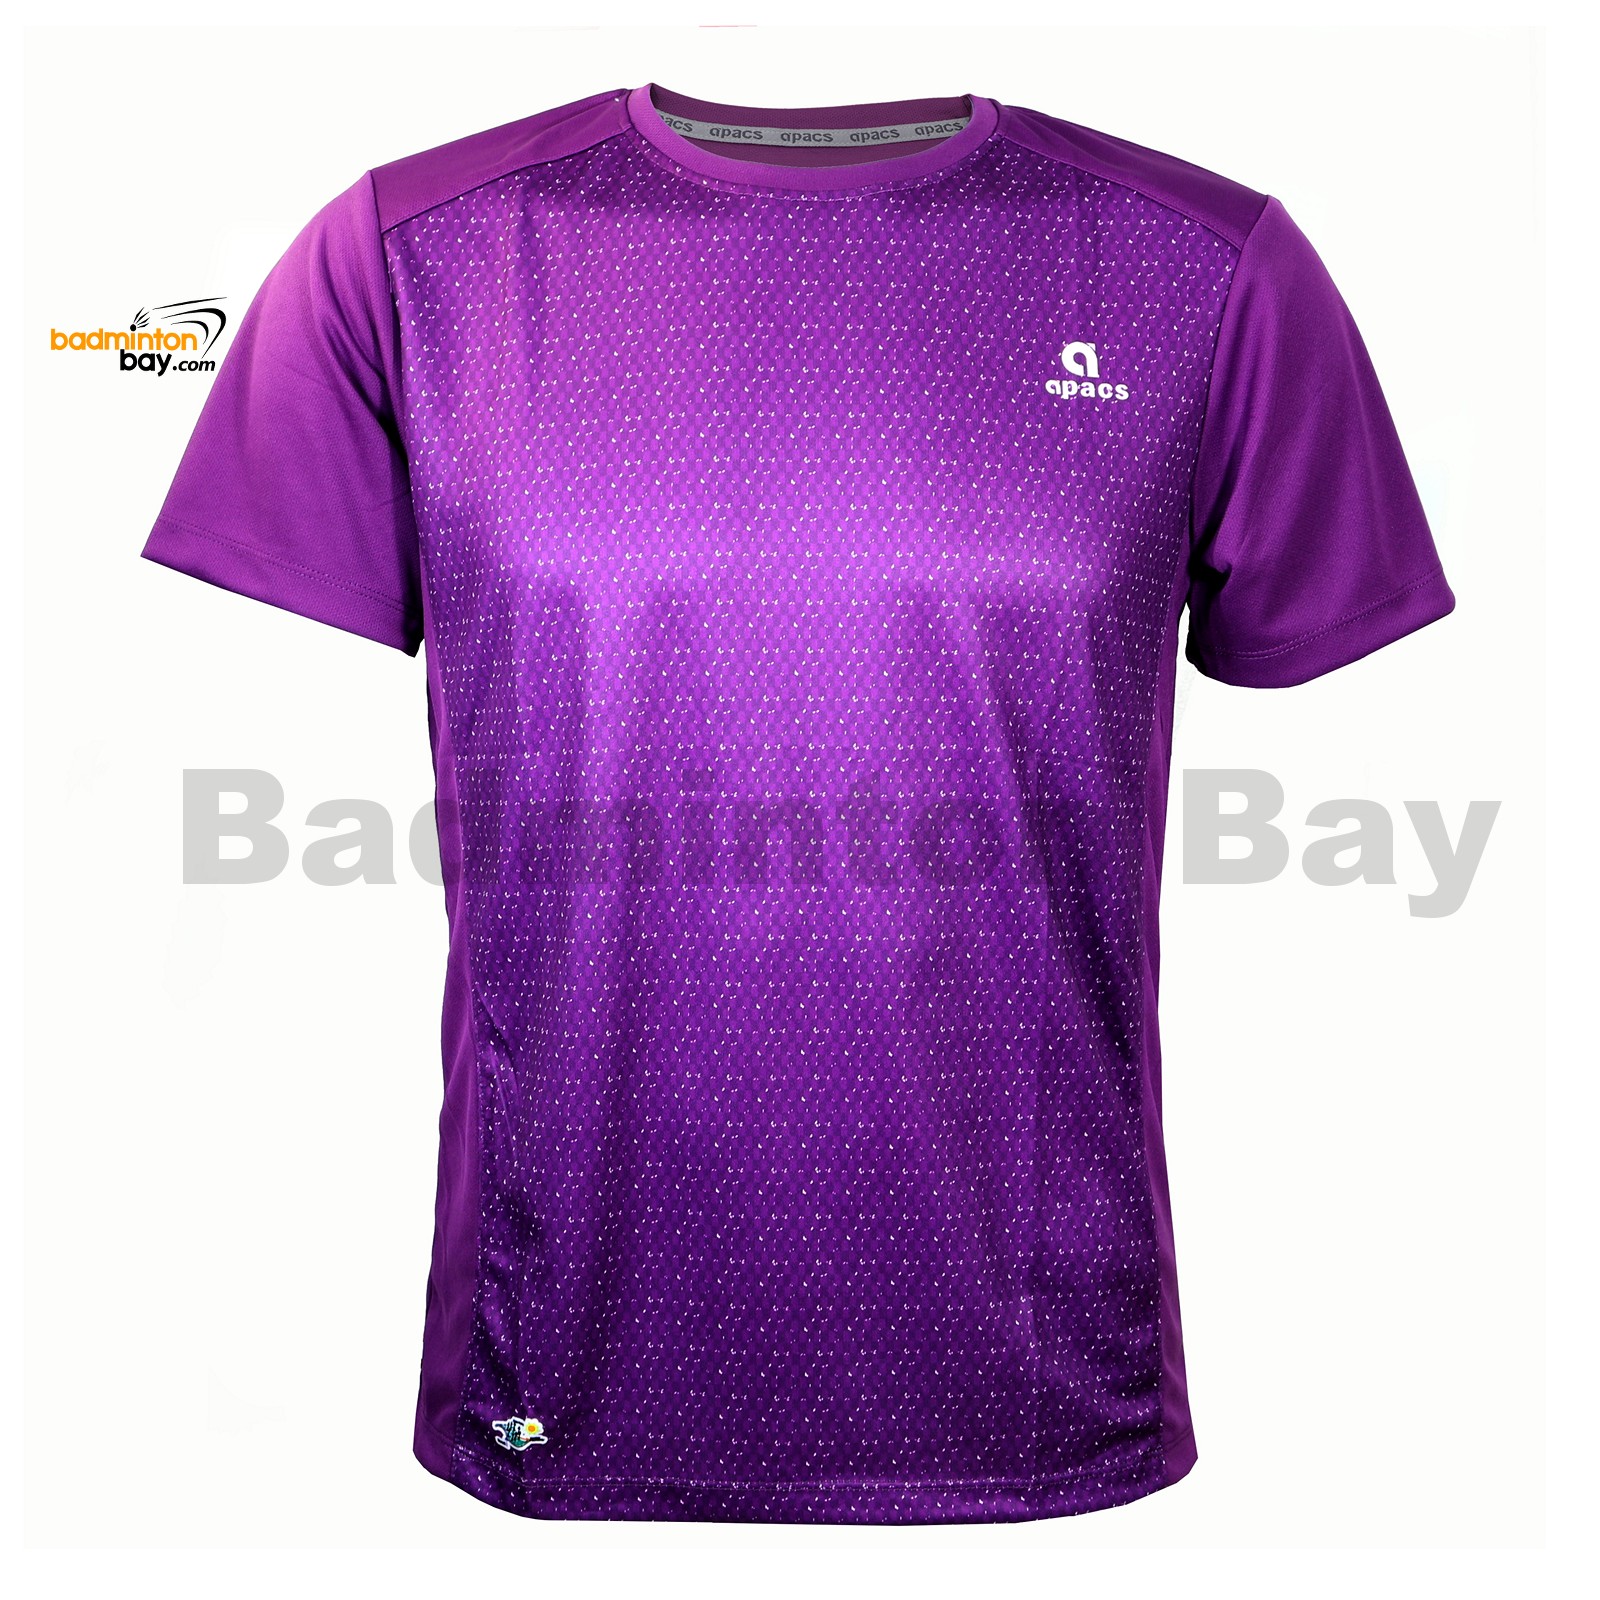 jersey shirt violet